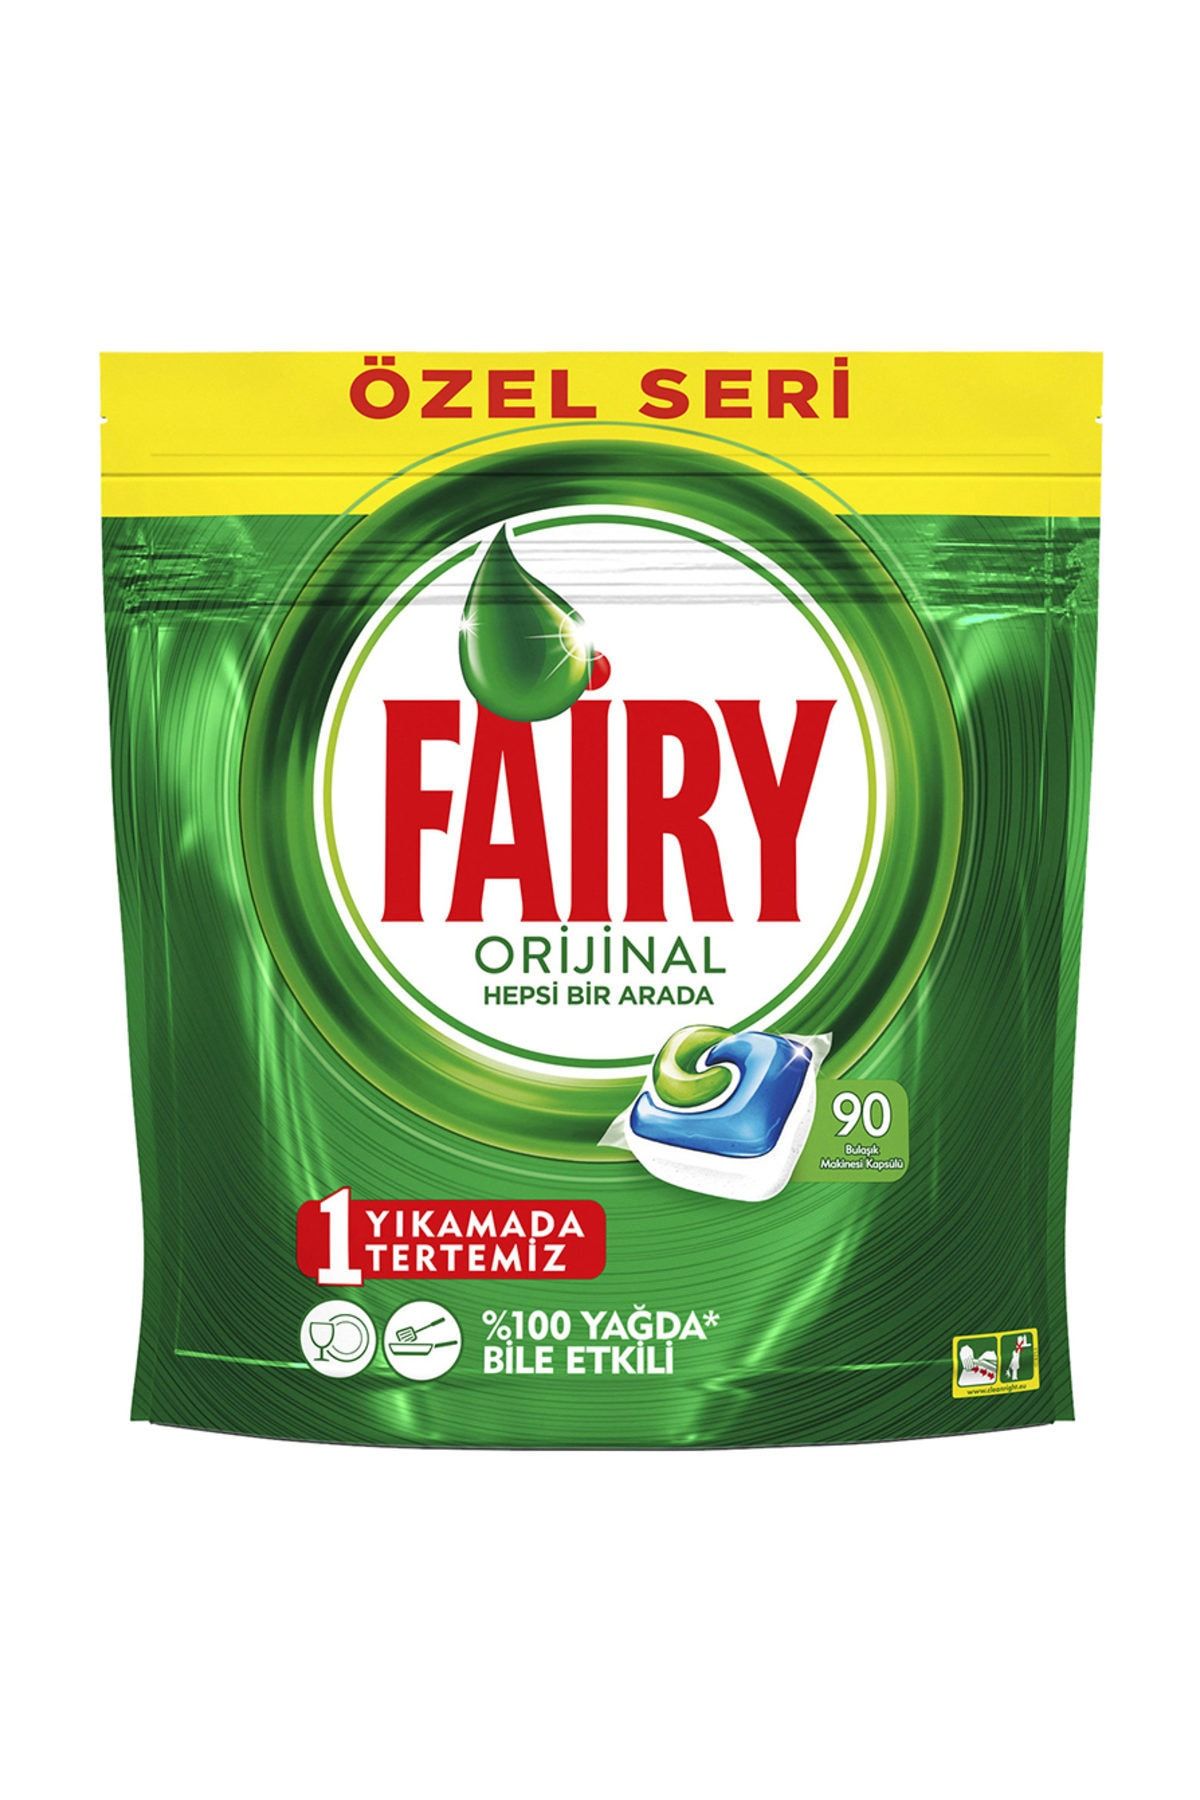 Fairy Hepsi Bir Arada Original 90'Lı Kapsül 1216 g